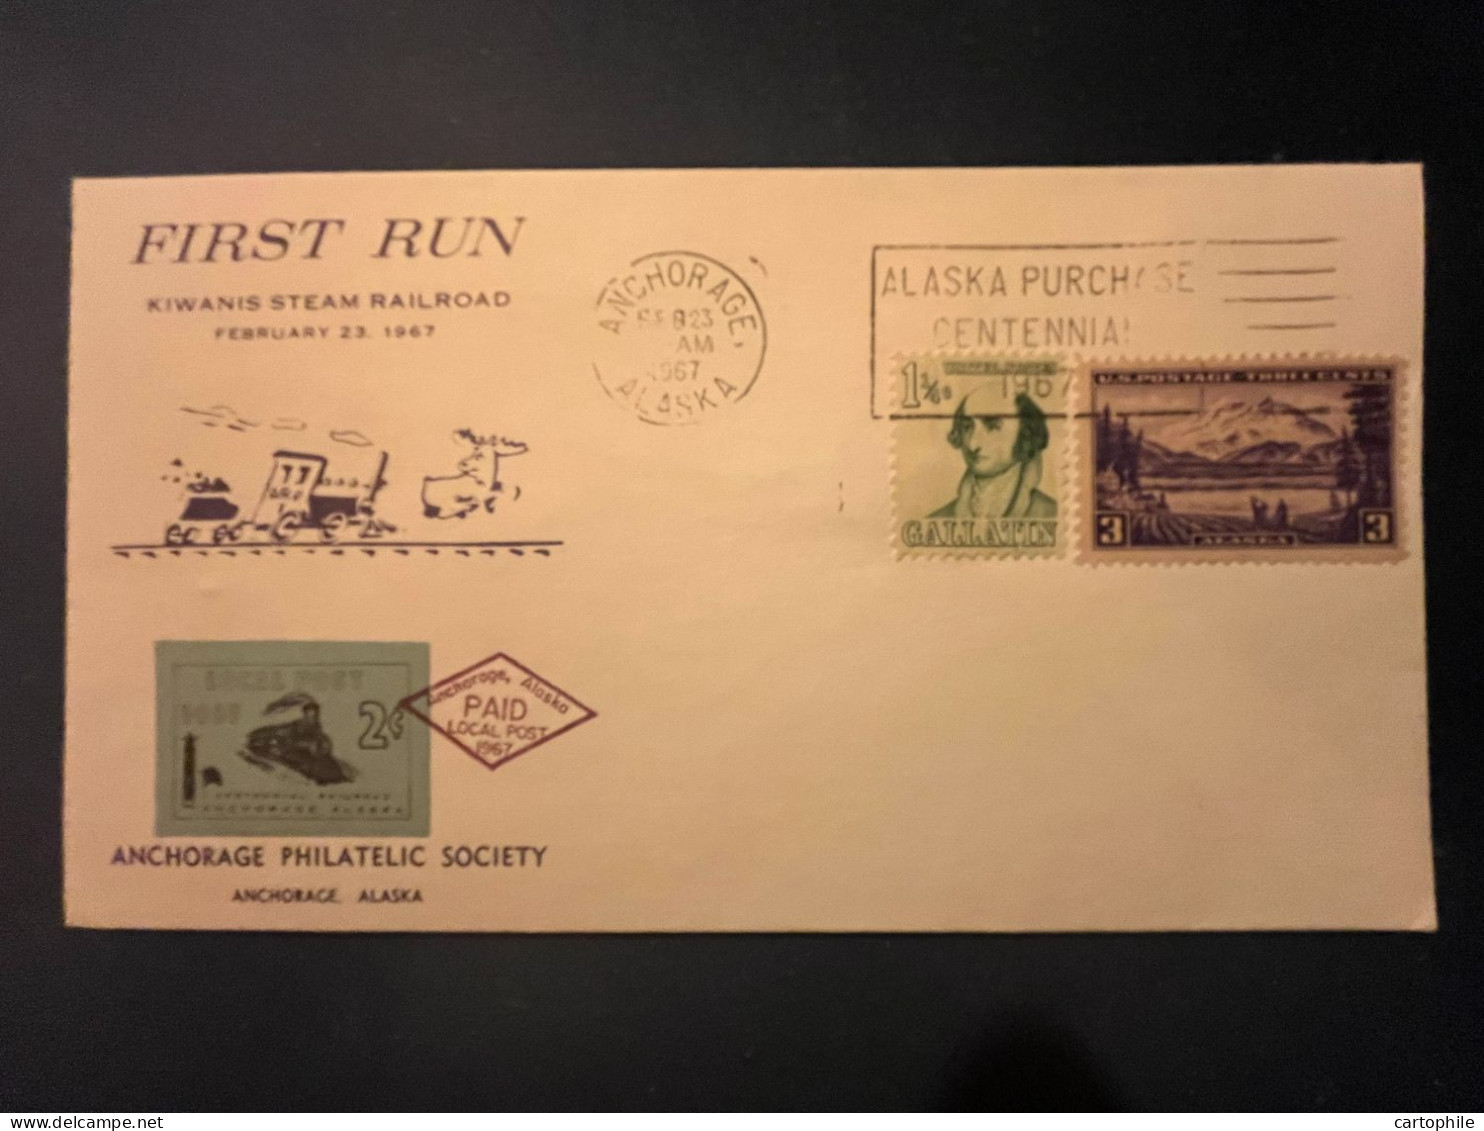 Local Post Anchorage Alaska - First Run Kiwanis Steam Railroad Cover 1967 - Timbre Local 2c Centennial Railroad - Storia Postale